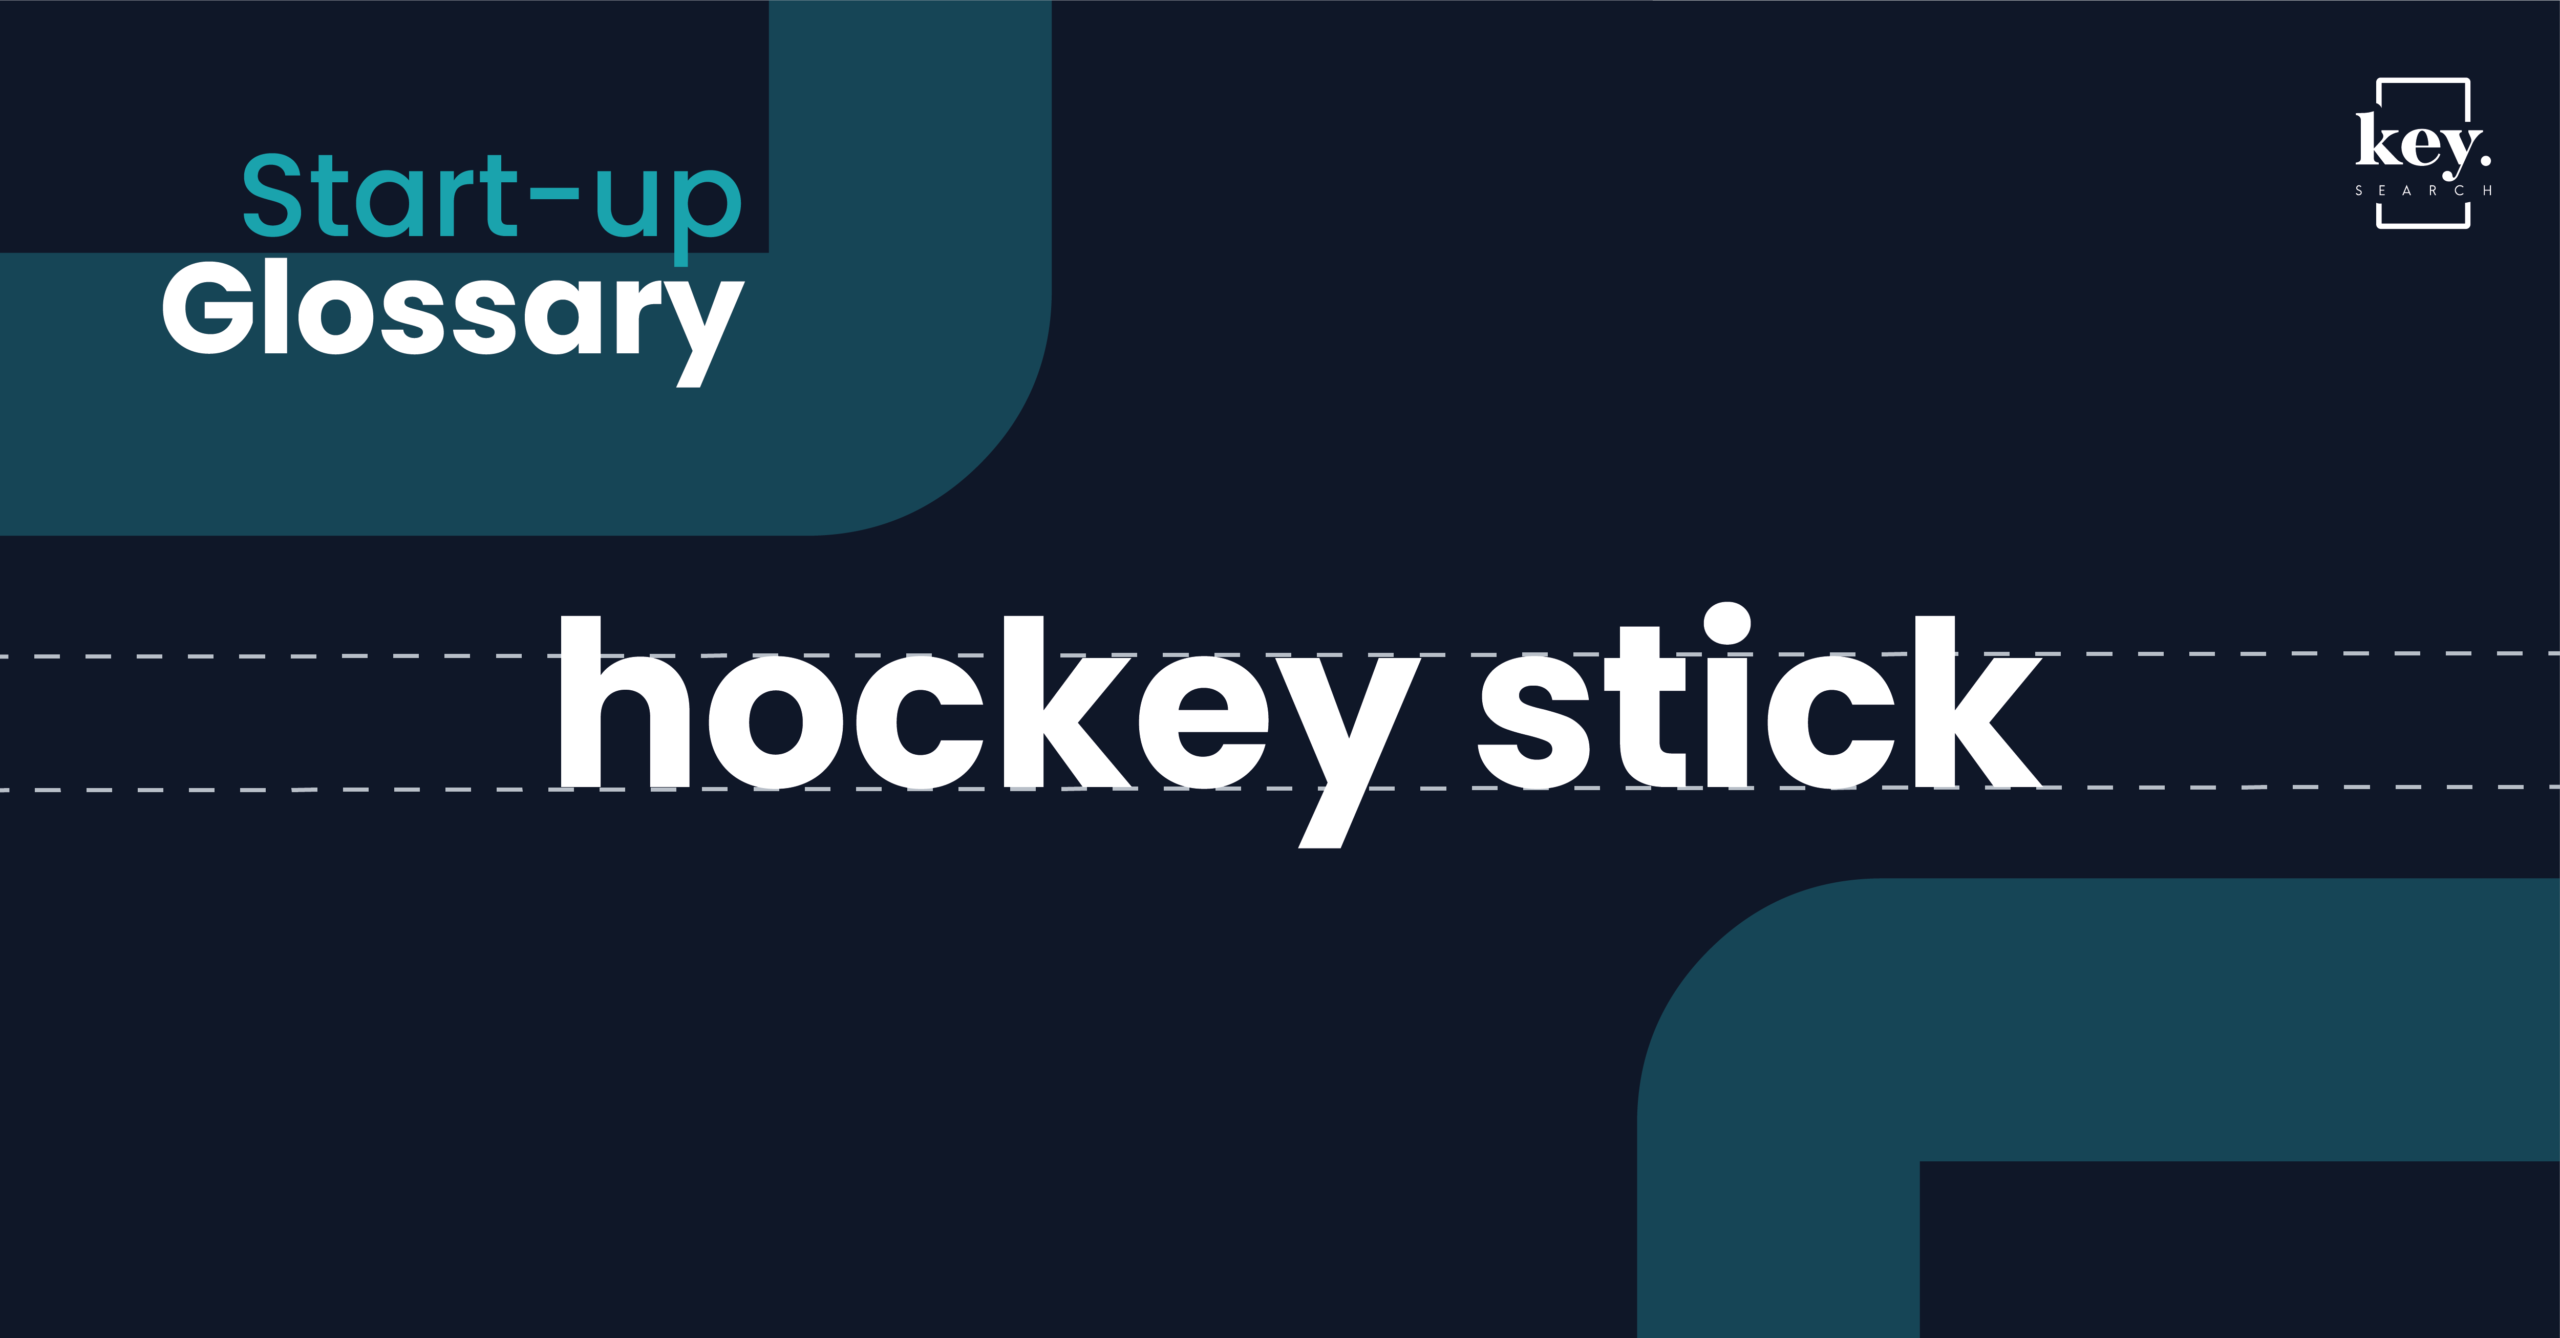 Start-up Glossary_Hockey stick